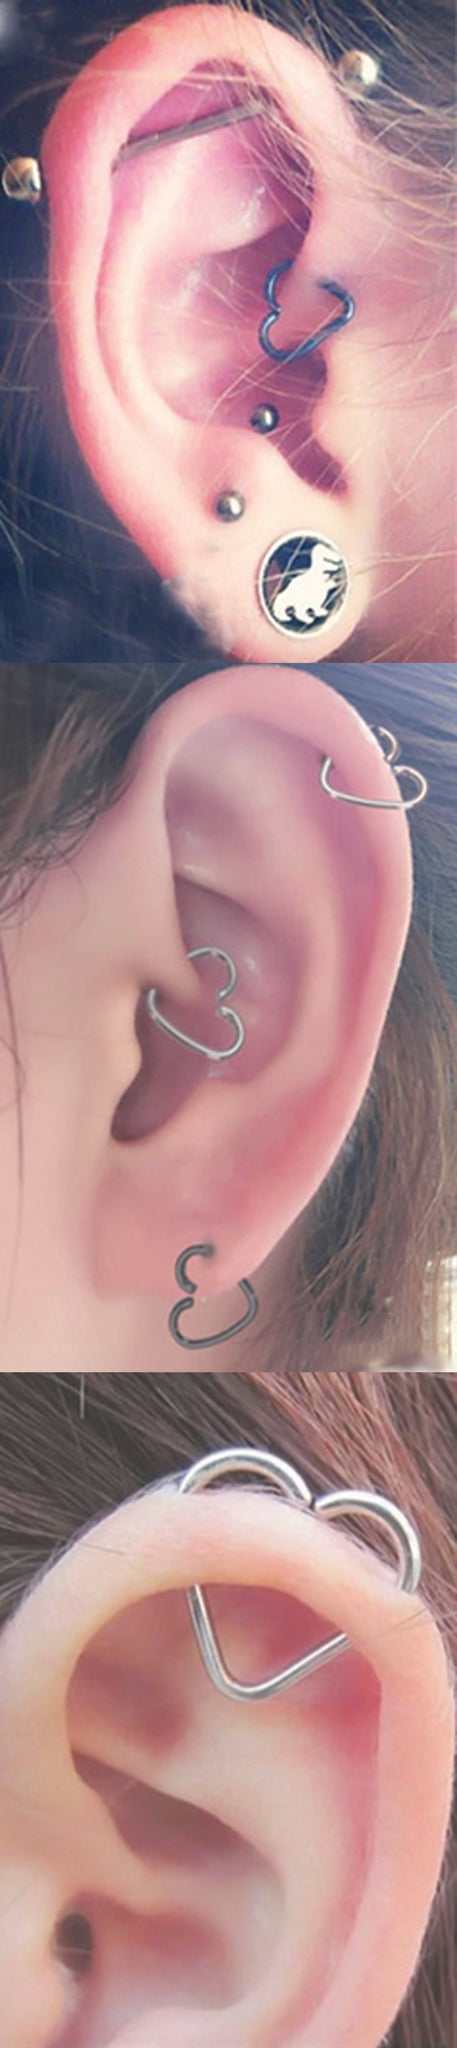 Cute Ear Piercing Ideas - Heart Daith Wired Earring - Silver Rook Hoop - Silver Cartilage Ring - Industrial Barbell - MyBodiArt.com 